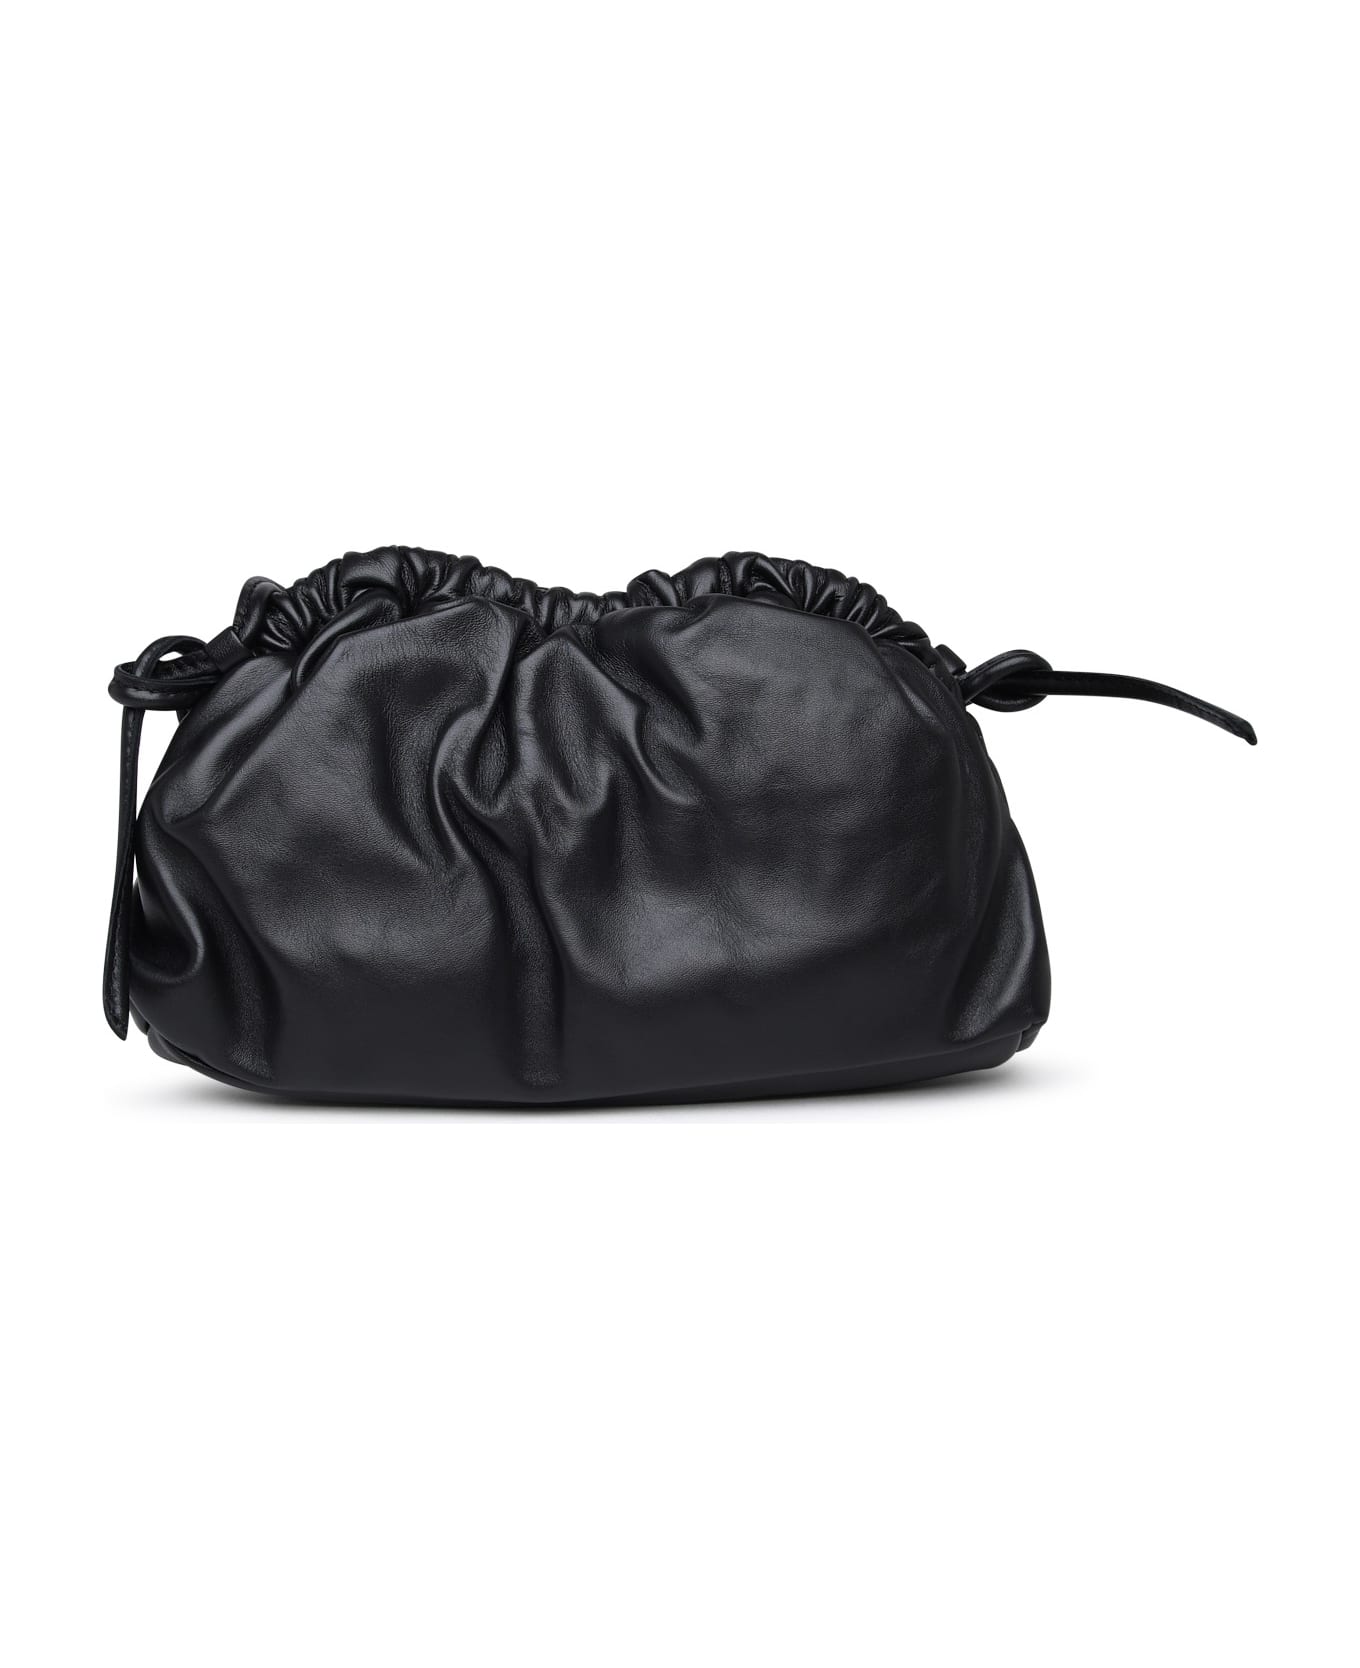 Mansur Gavriel Small 'cloud' Black Leather Crossbody Bag - Black